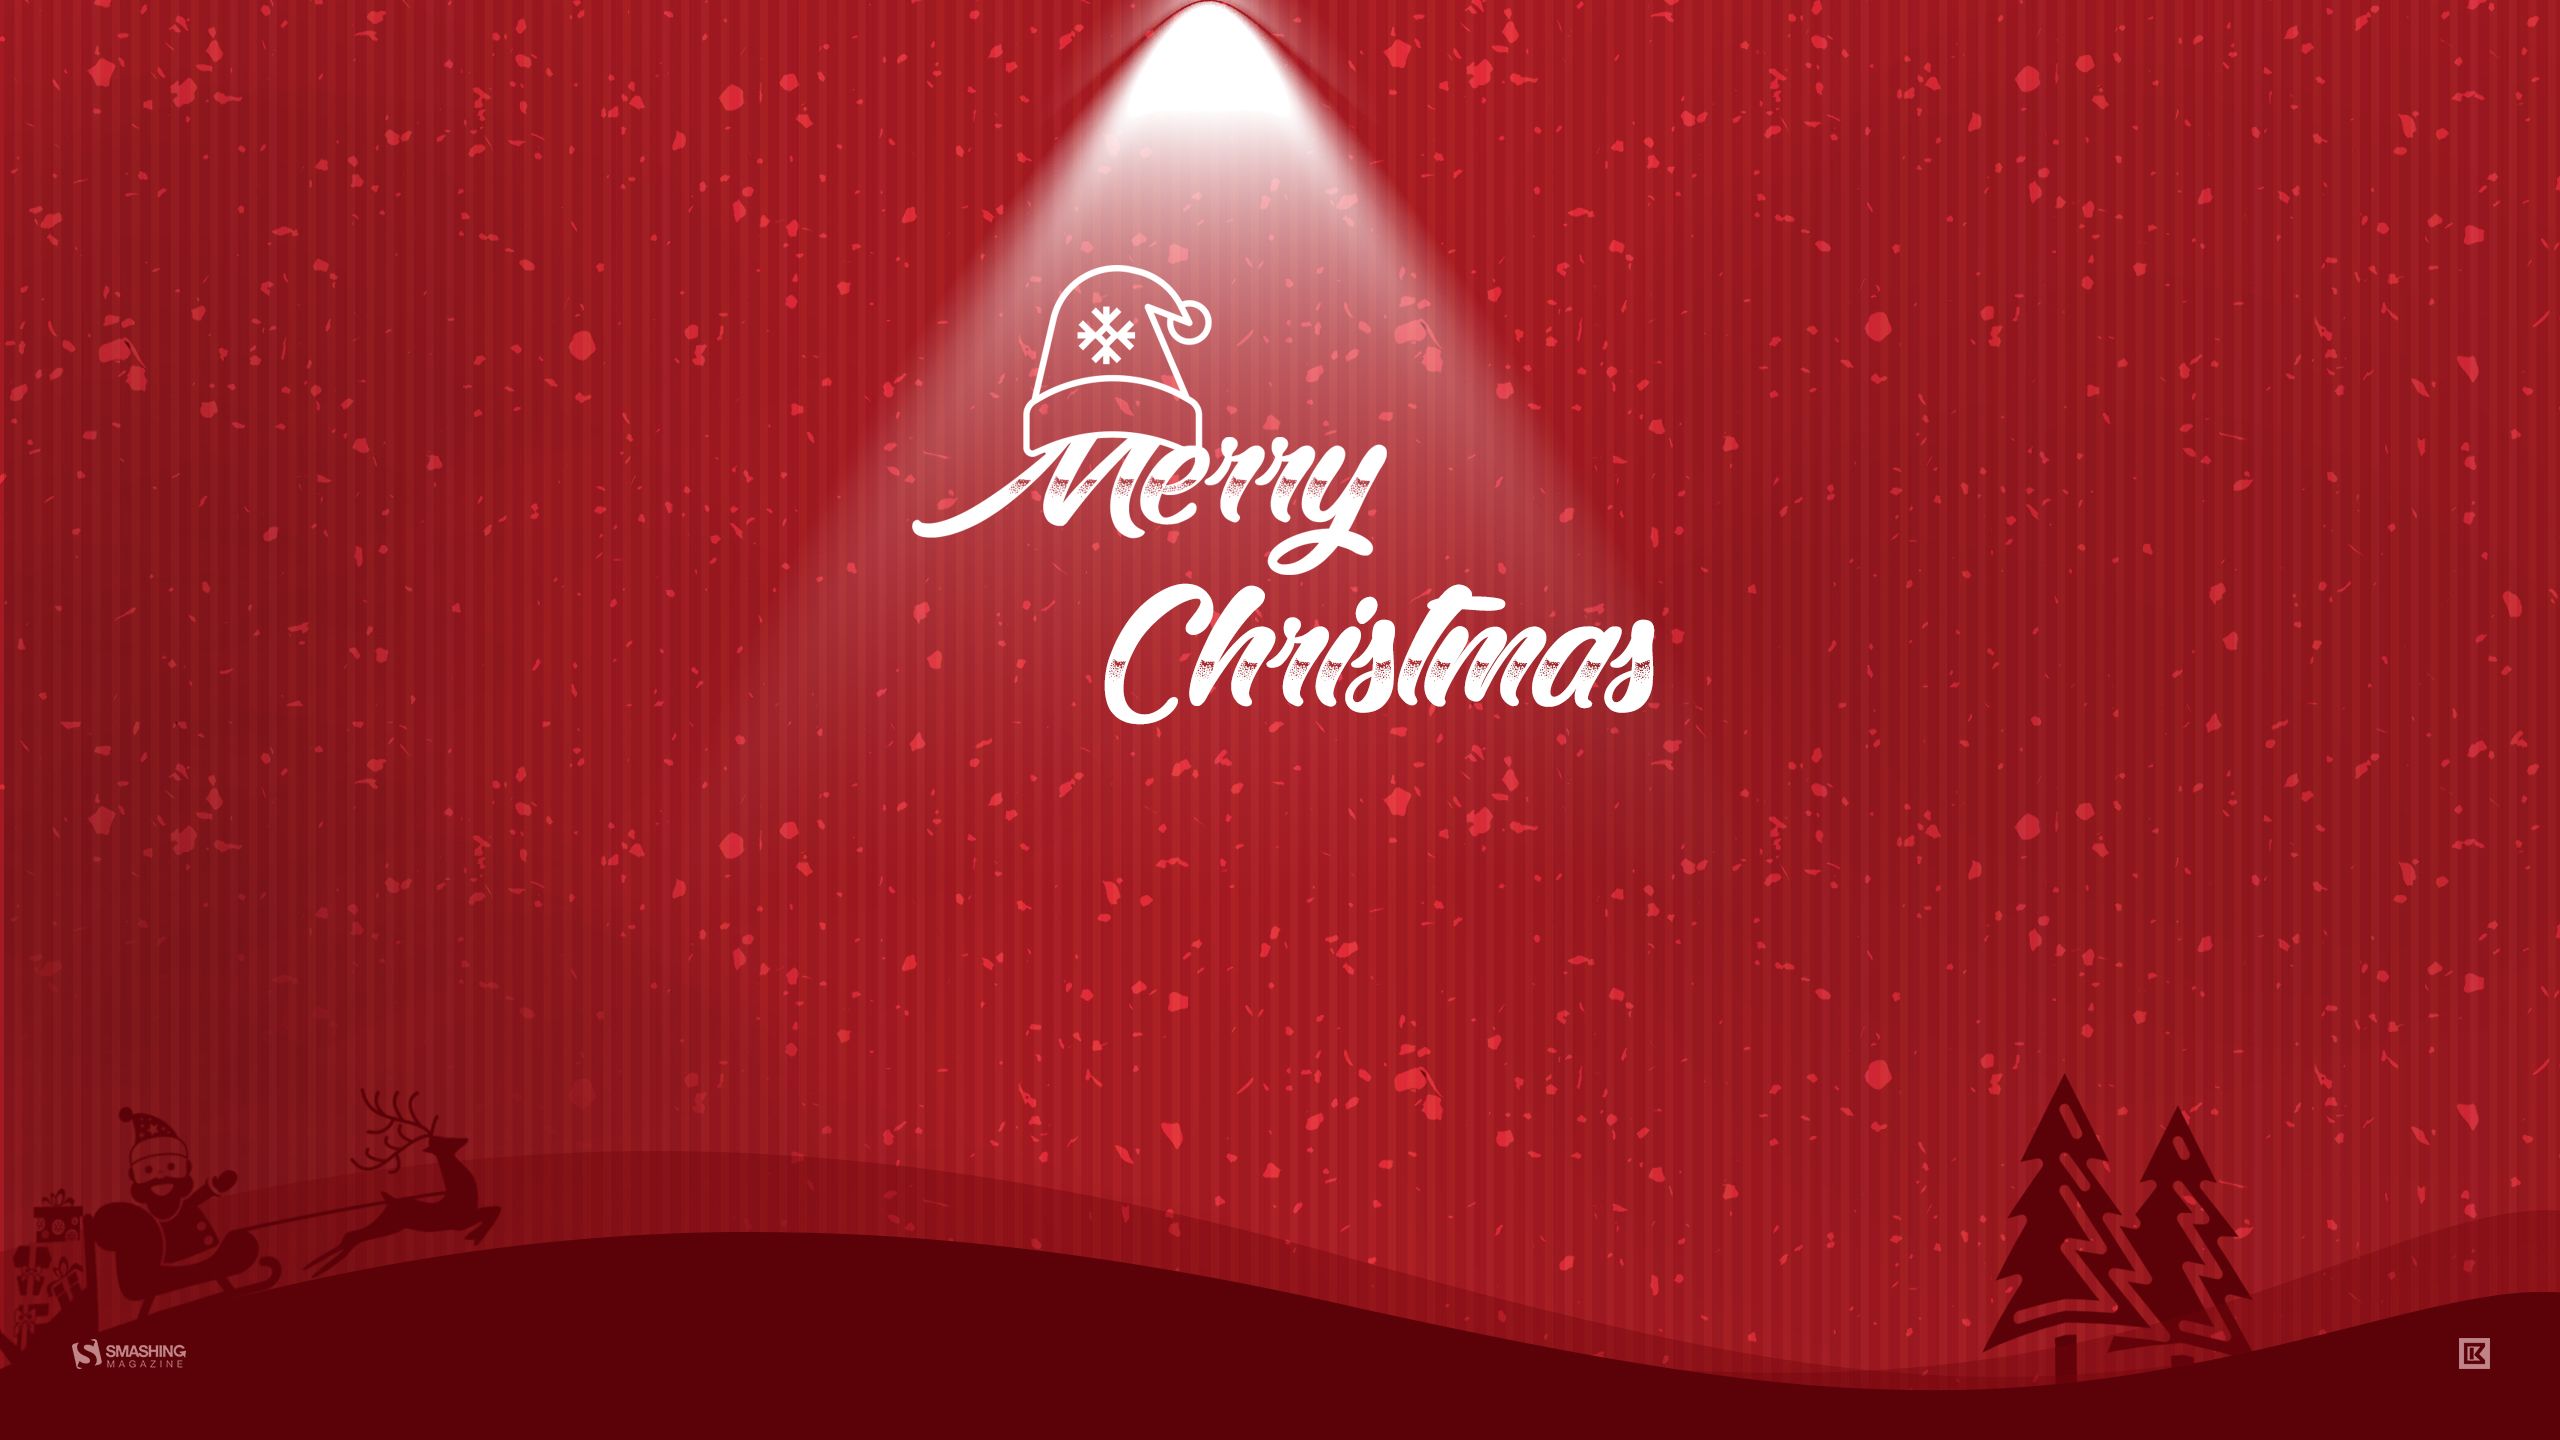 Beautiful Christmas HD Desktop Wallpaper 2560x1440 High Quality